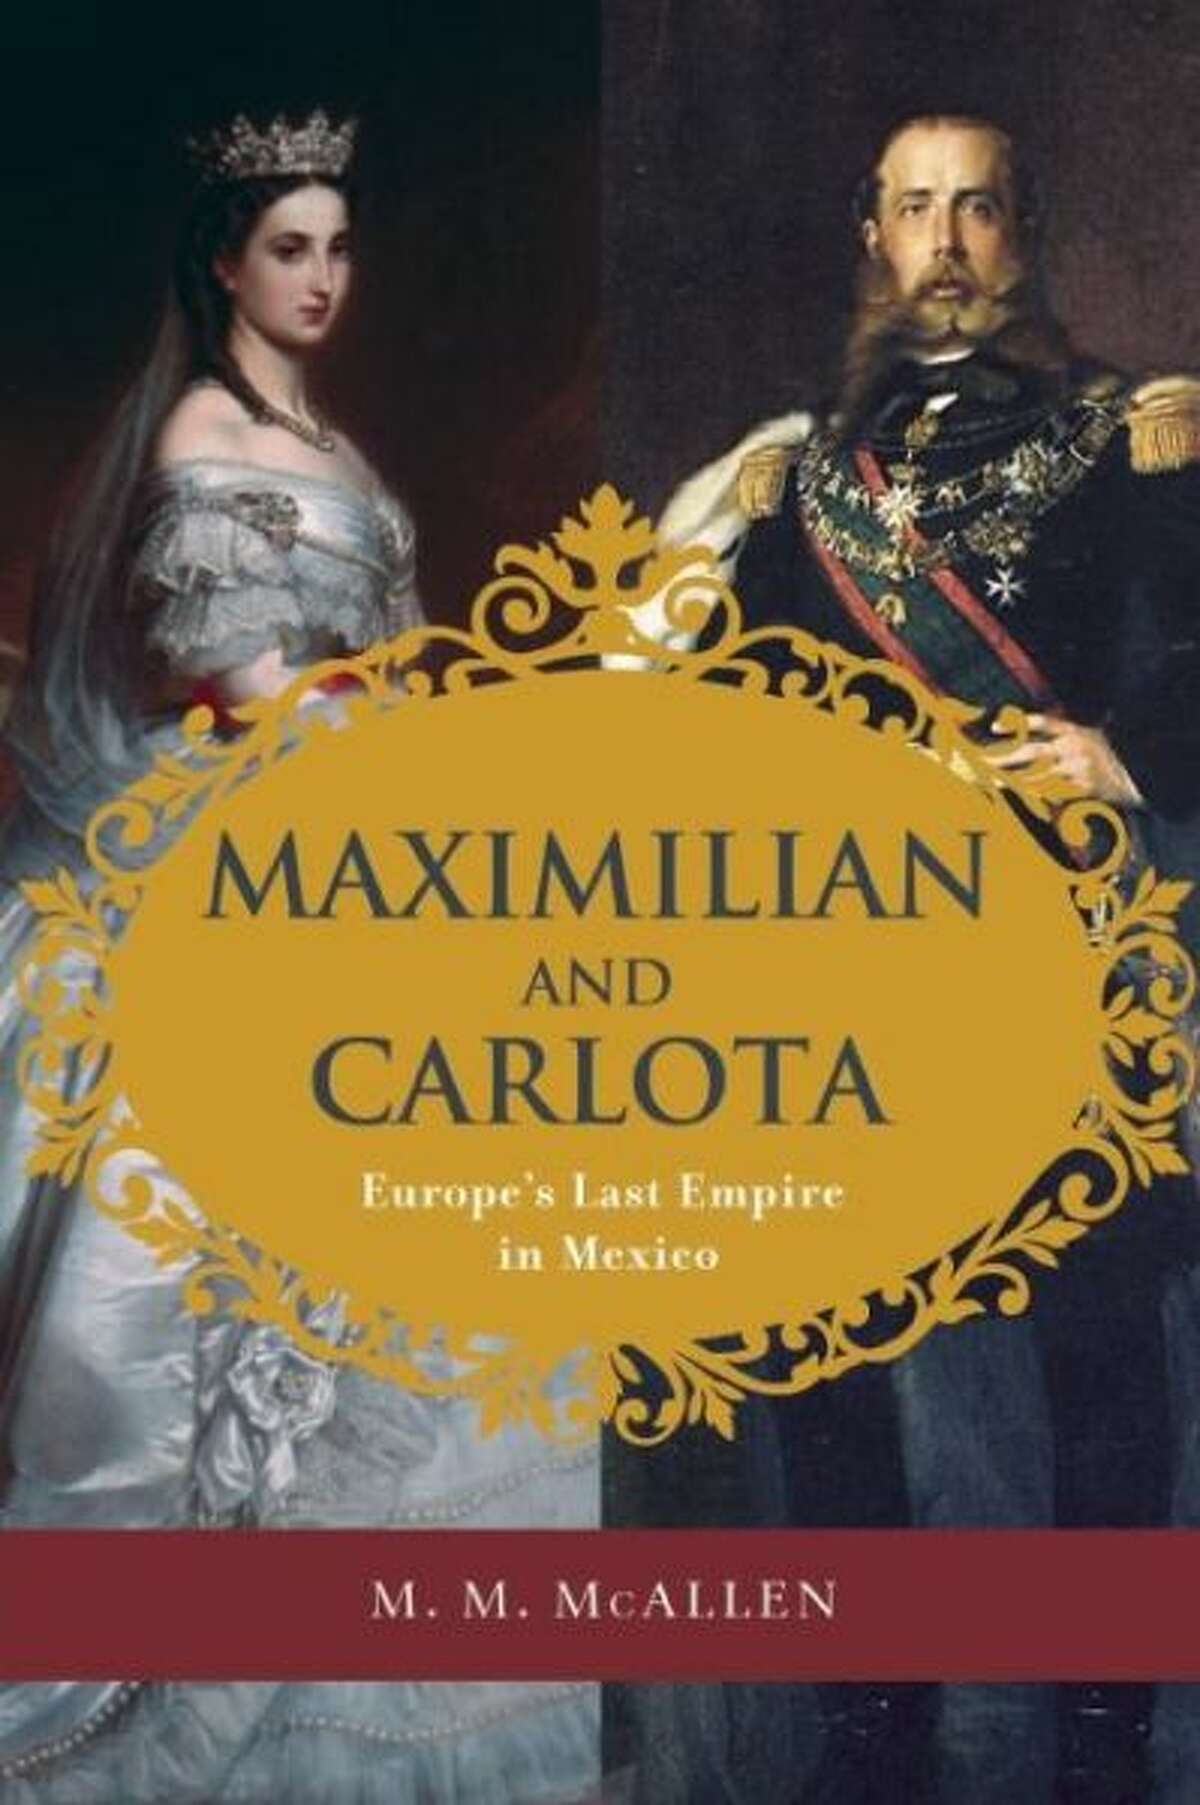 "Maximilian and Carlota," by M.M. McAllen